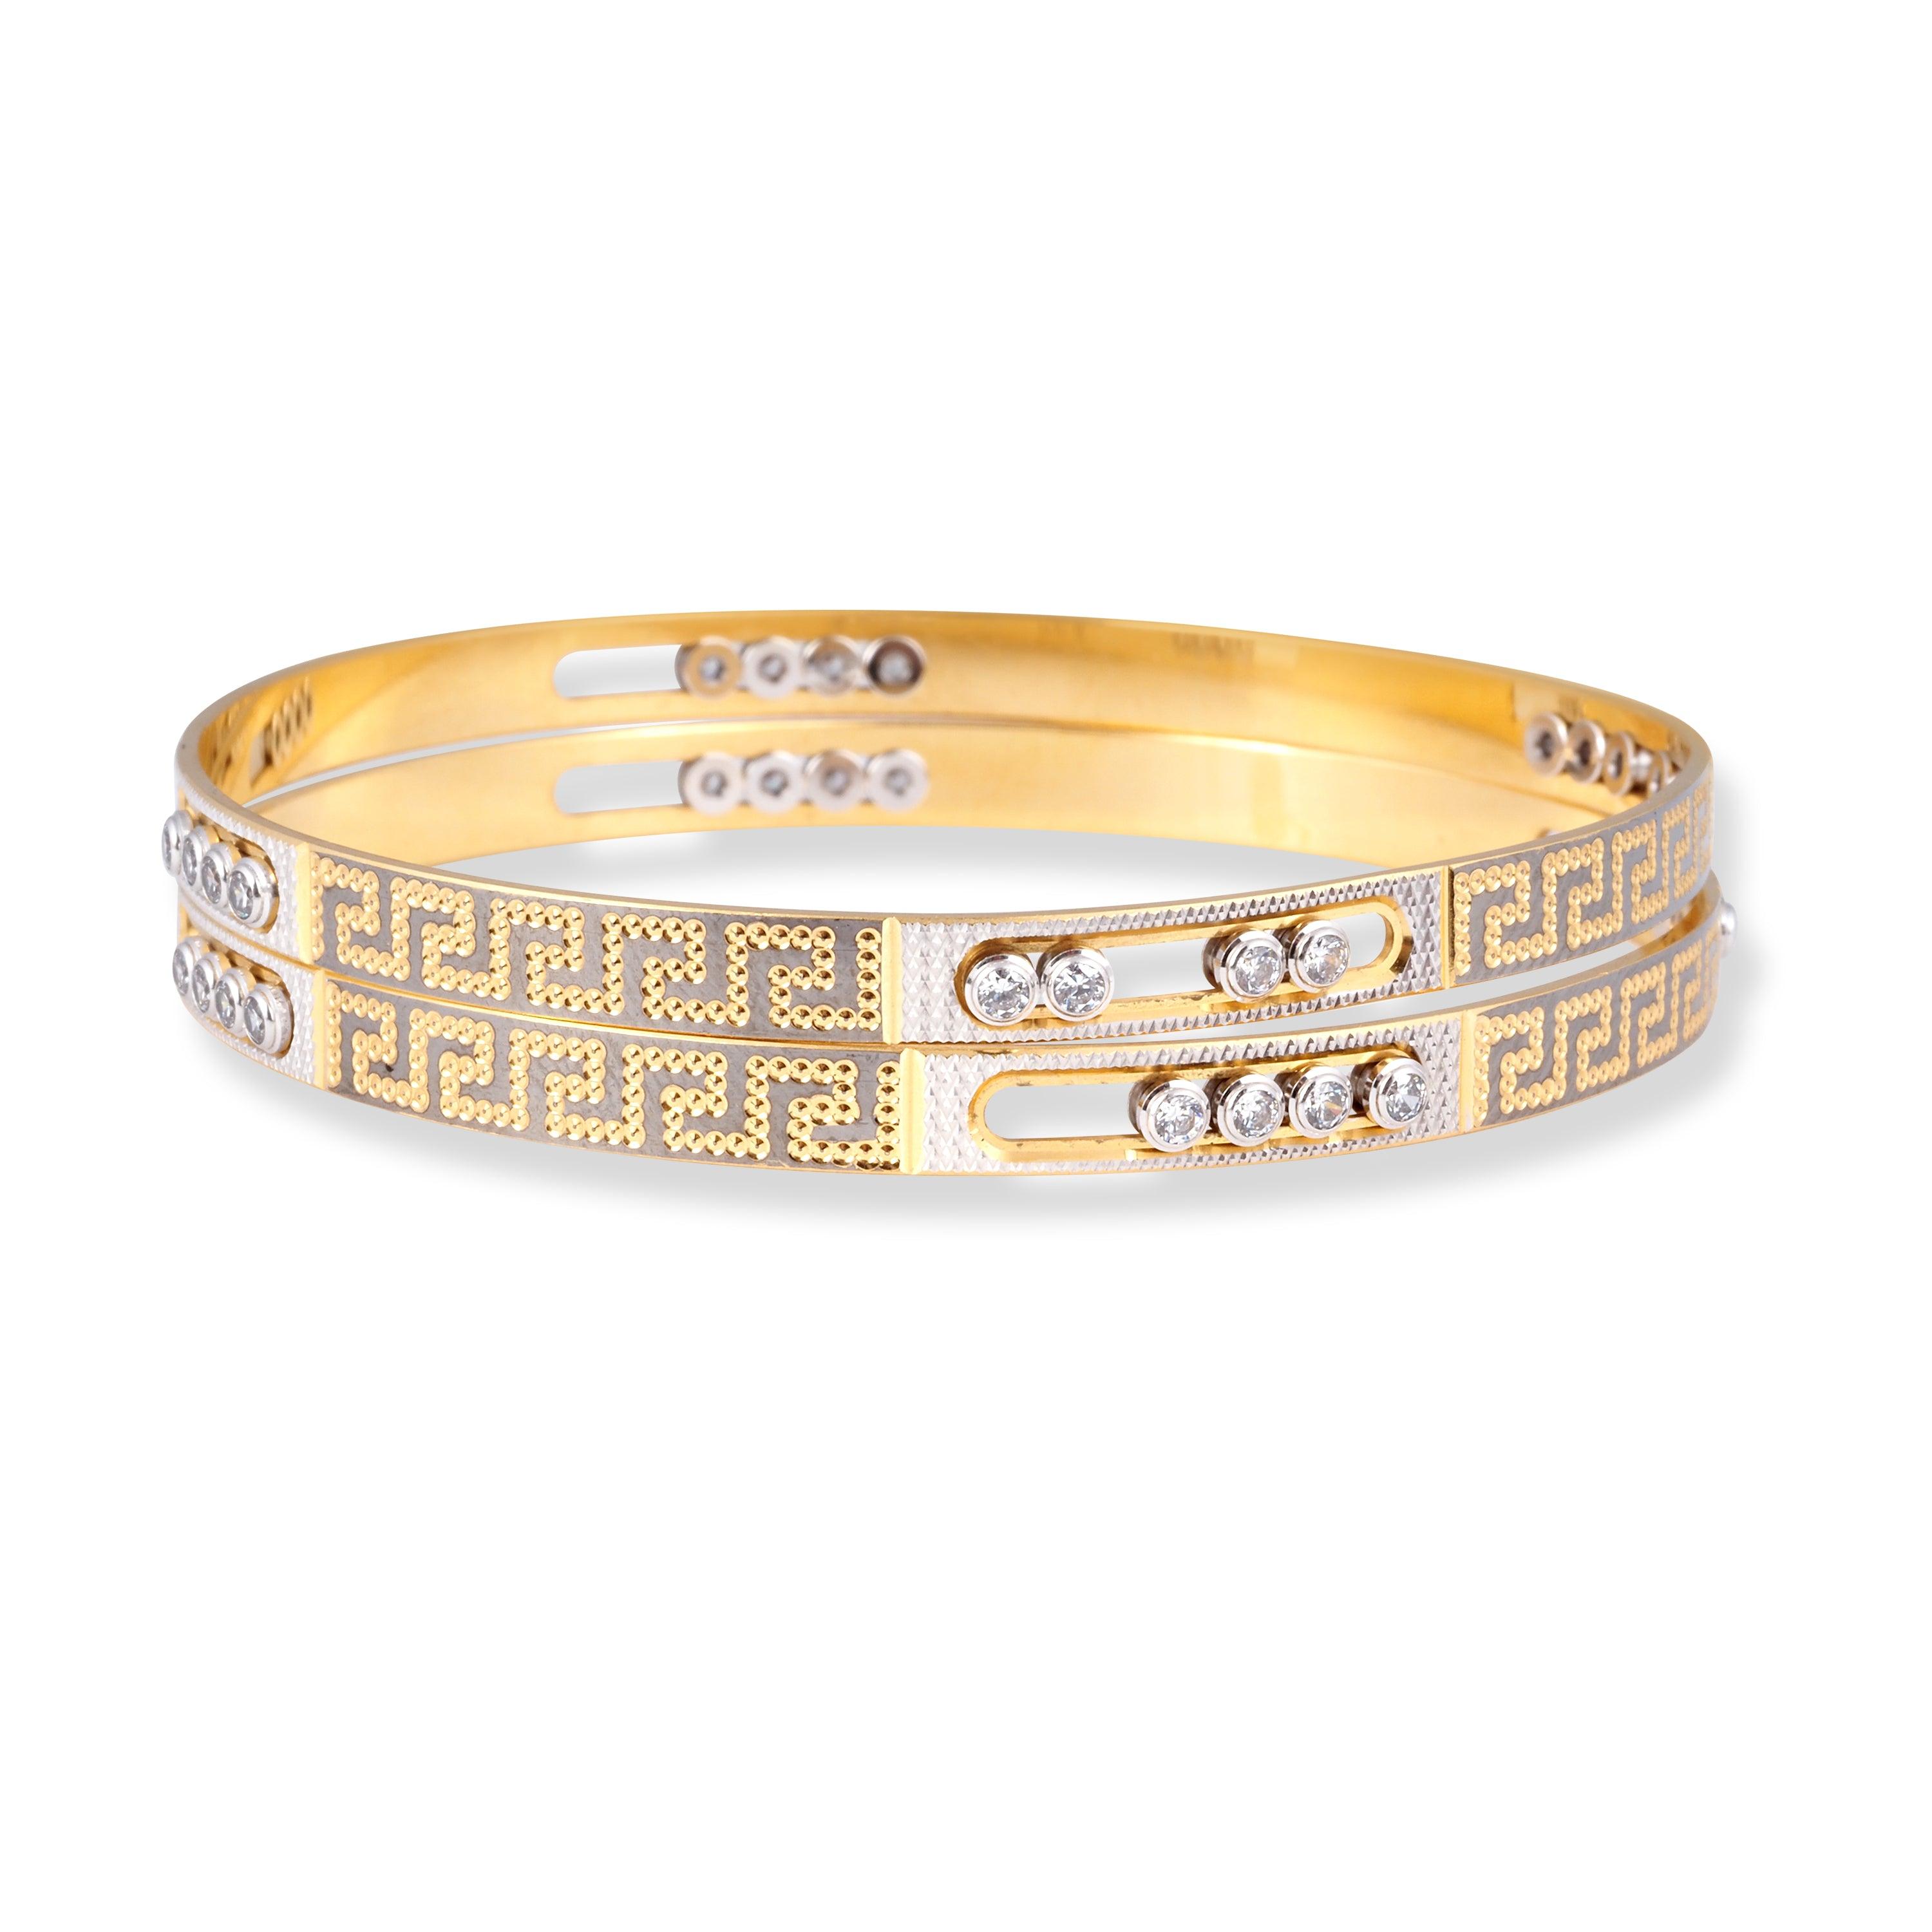 Pair of 22ct Gold Bangles with Sliding Bezel Set Cubic Zirconia Stones with Rhodium & Diamond Cut Design B-8312 - Minar Jewellers